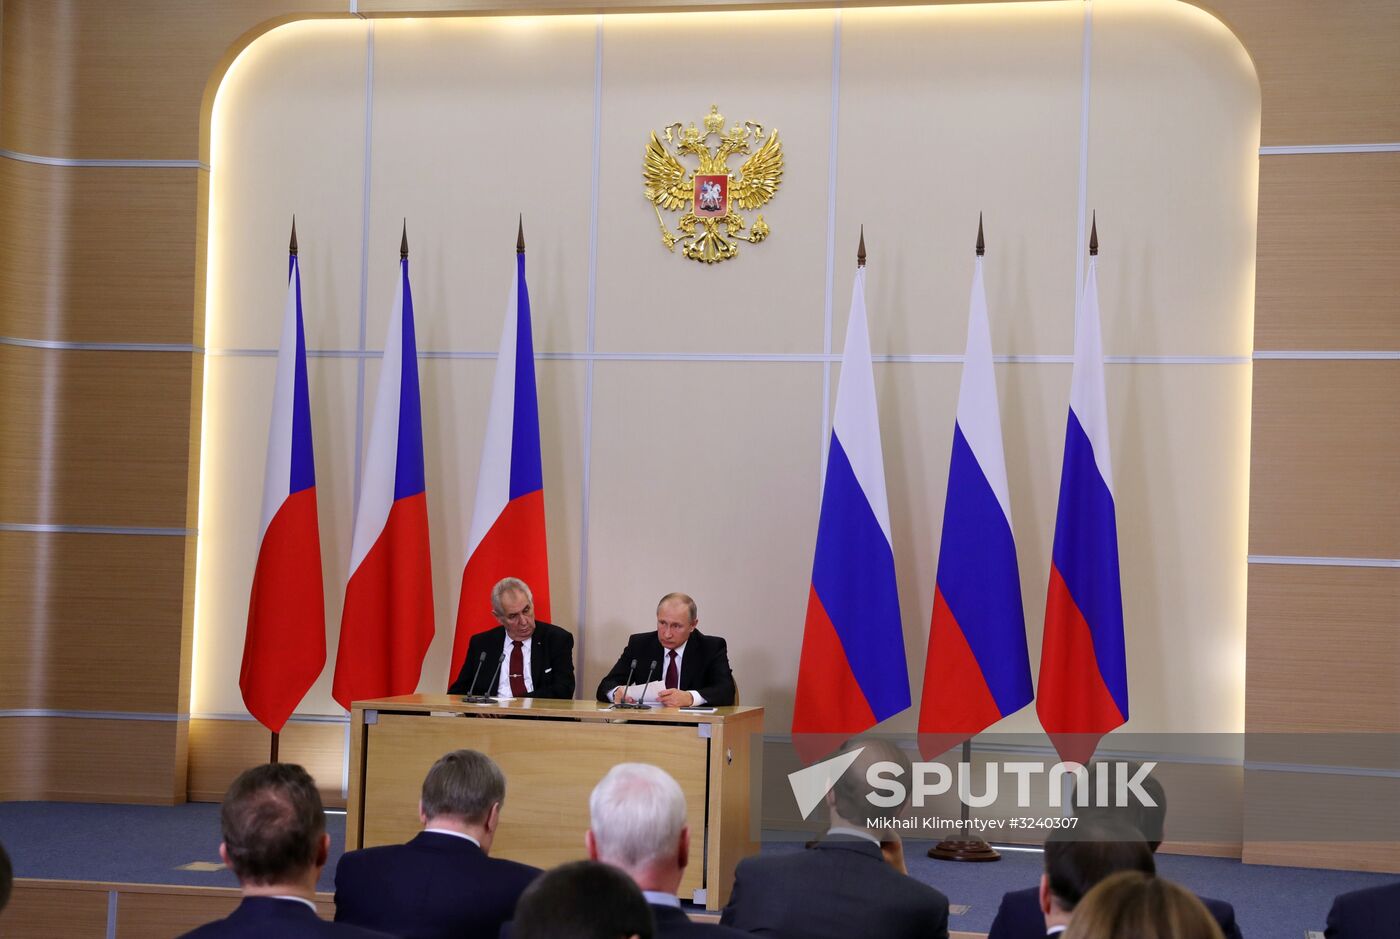 President Vladimir Putin meets with Czech Republic President Milos Zeman